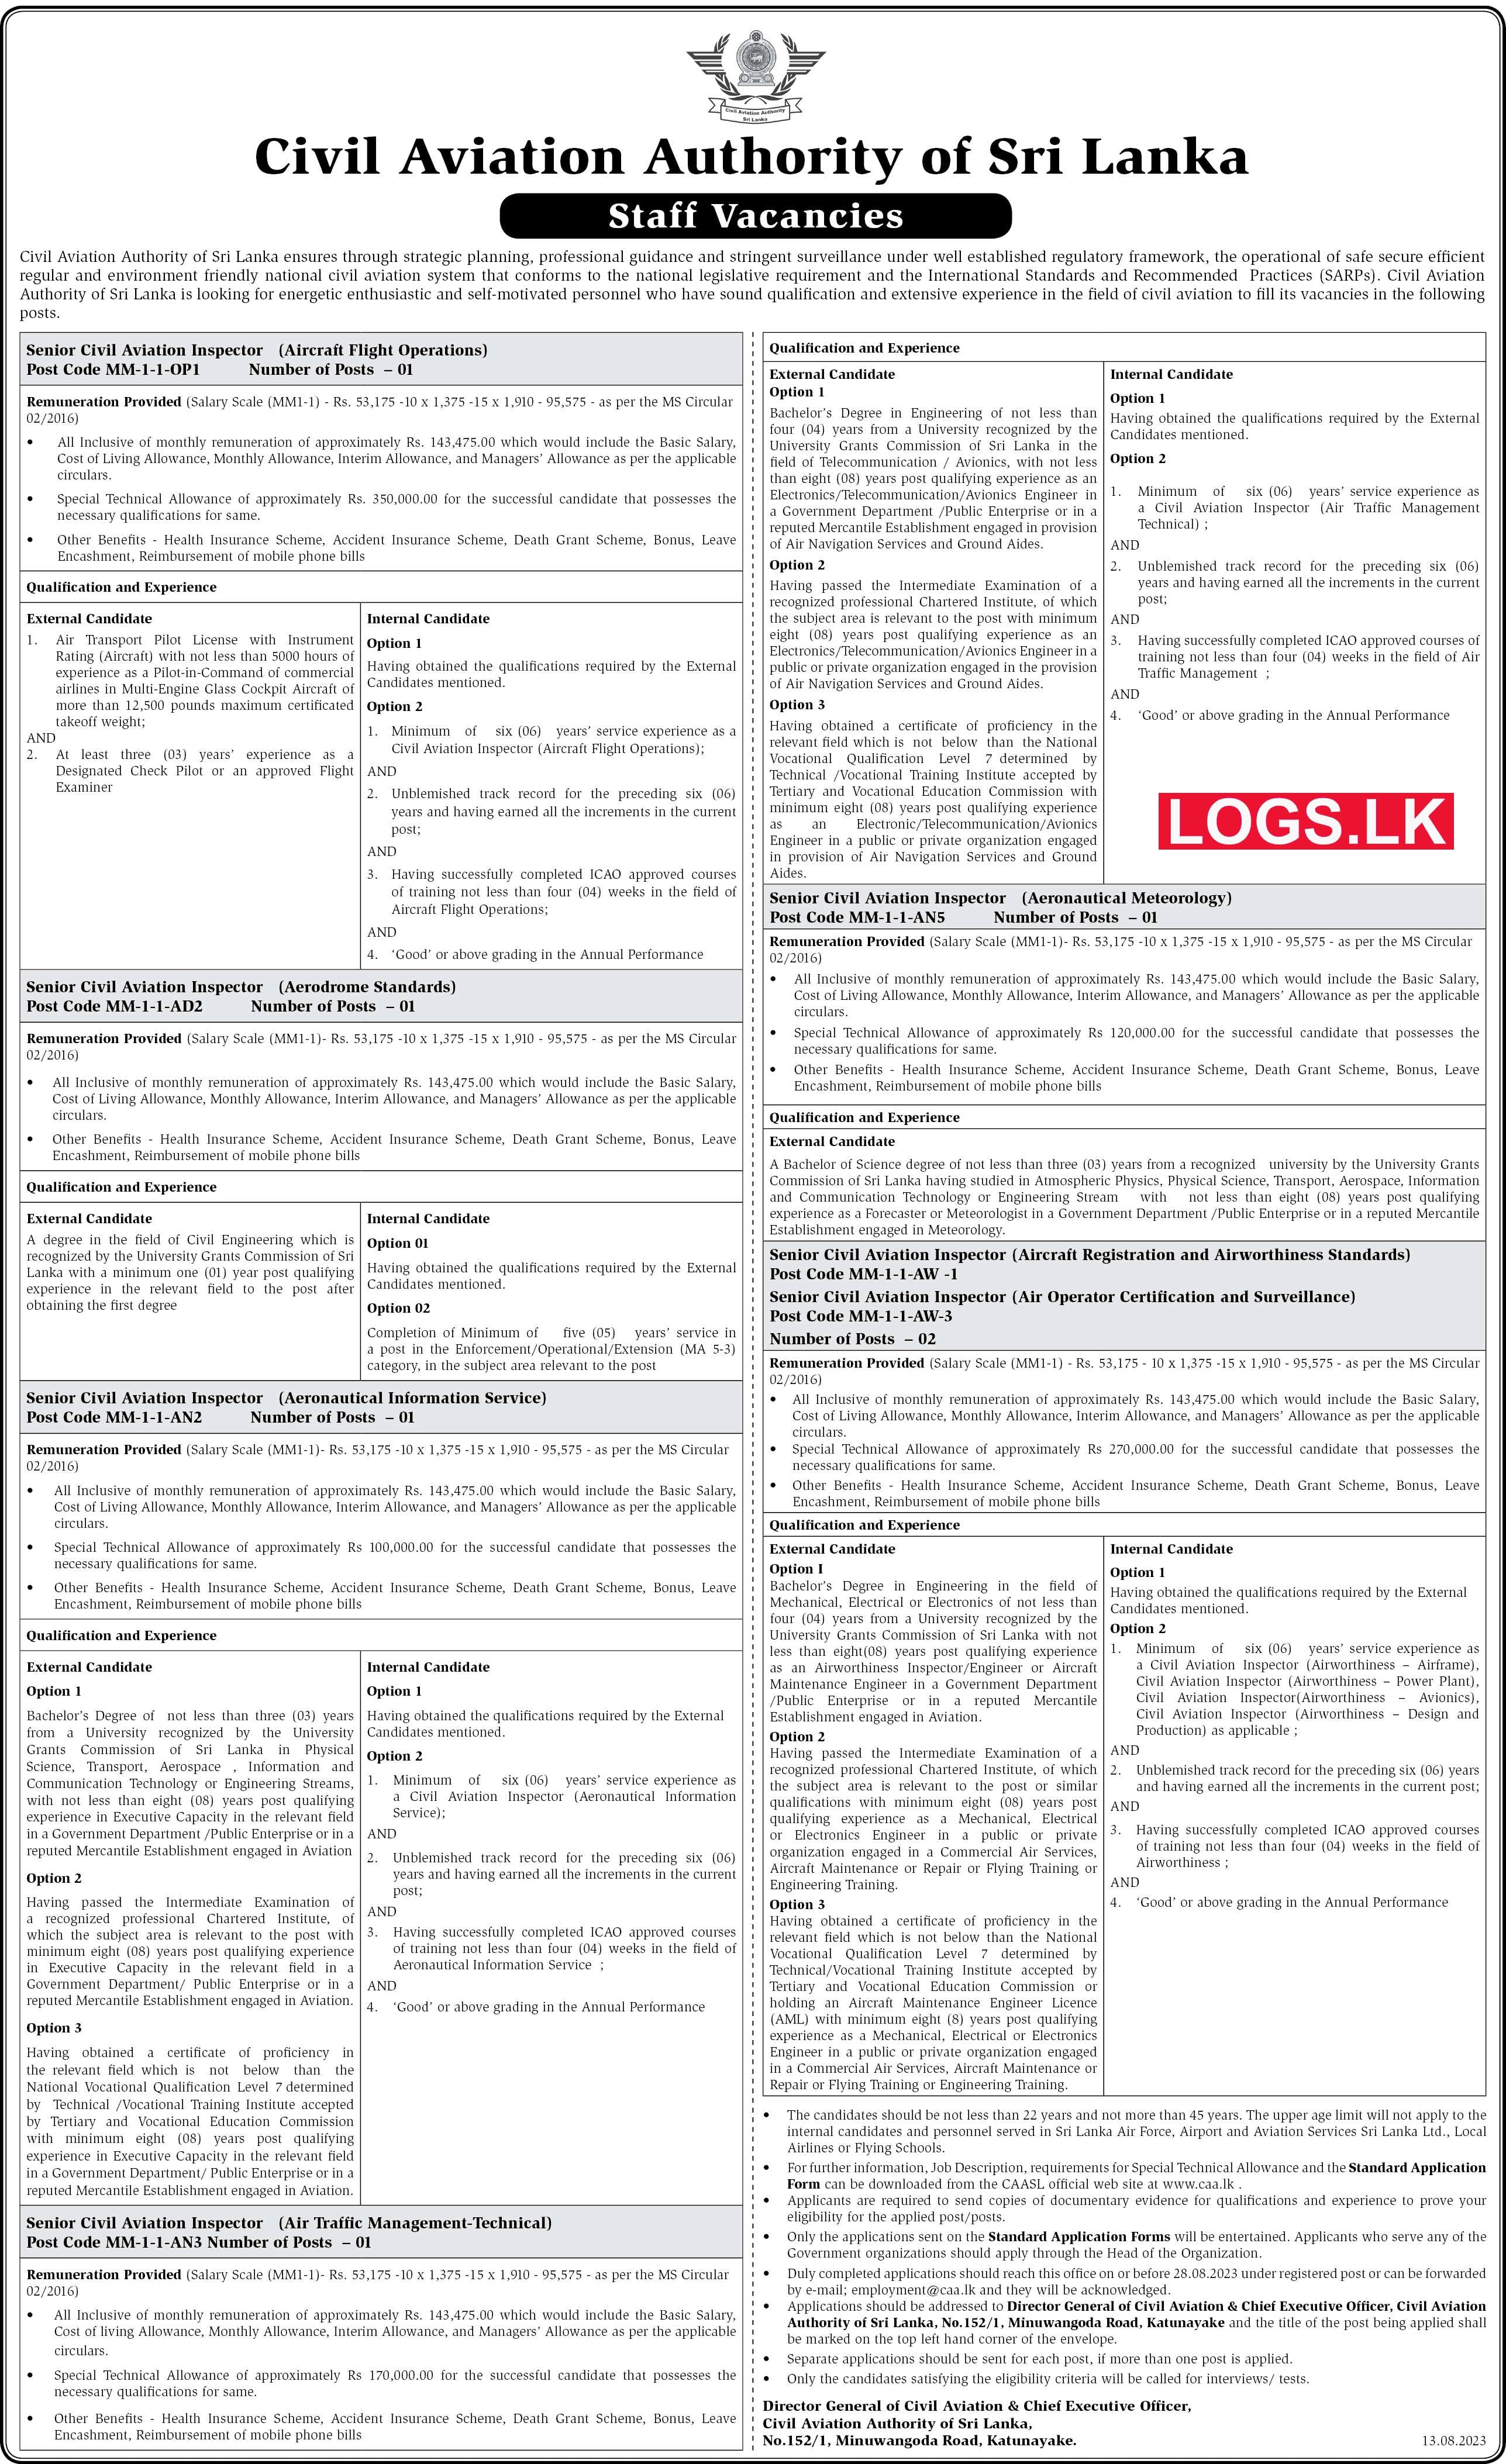 Civil Aviation Authority of Sri Lanka Job Vacancies 2023 Application Form, Details Download